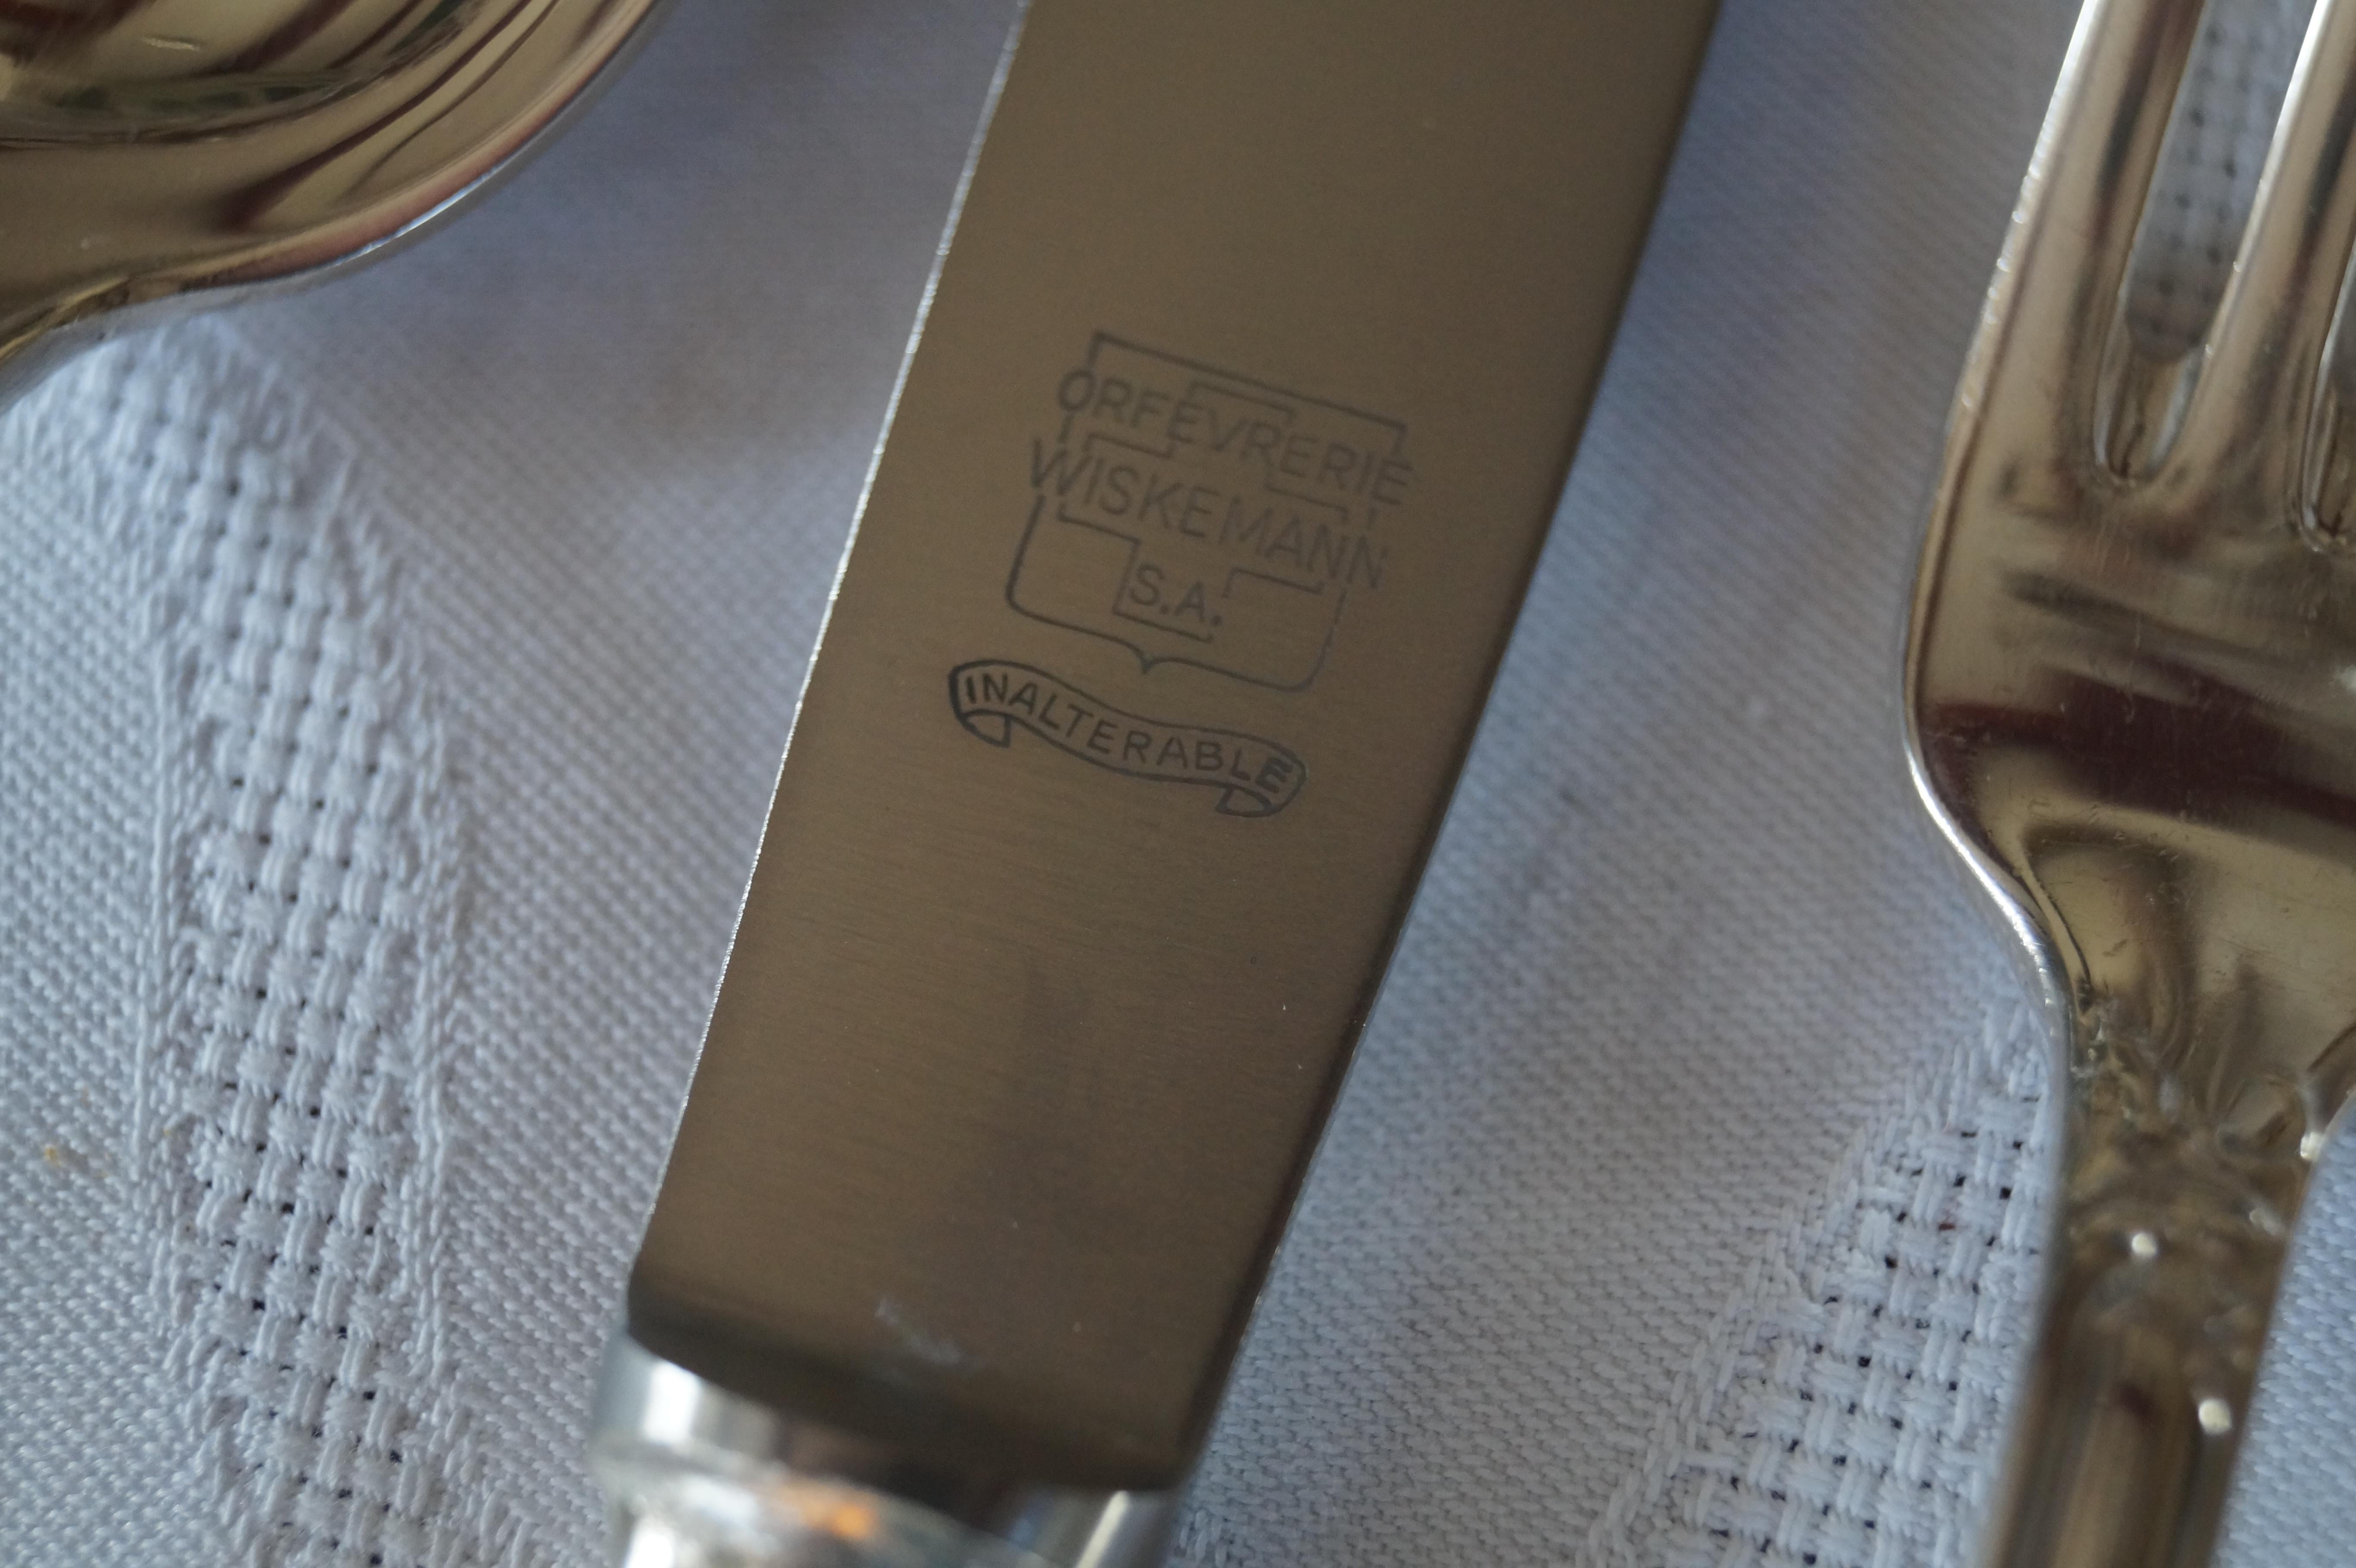 Silvered Antique Silver Plated WISKEMANN Cutlery Flatware set 